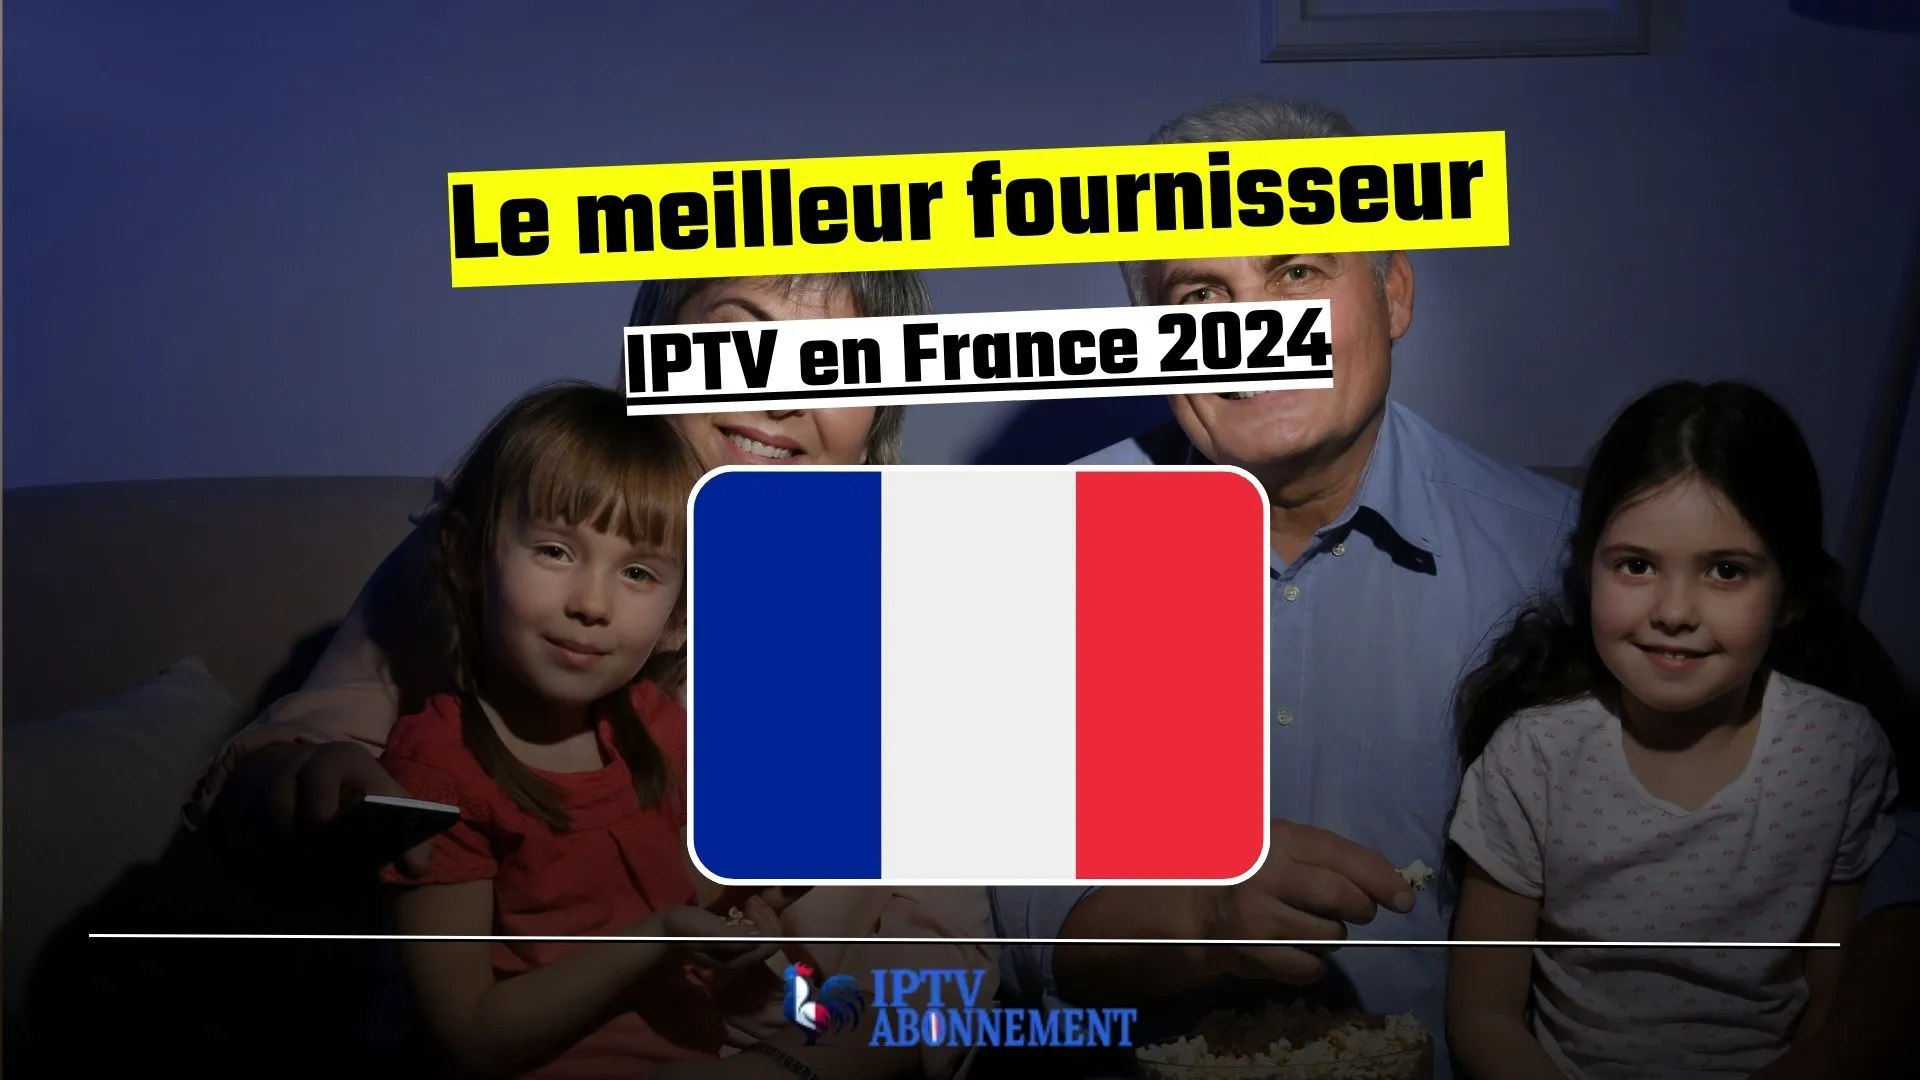 Le meilleur fournisseur IPTV en France 2024 : IPTV-abo.fr